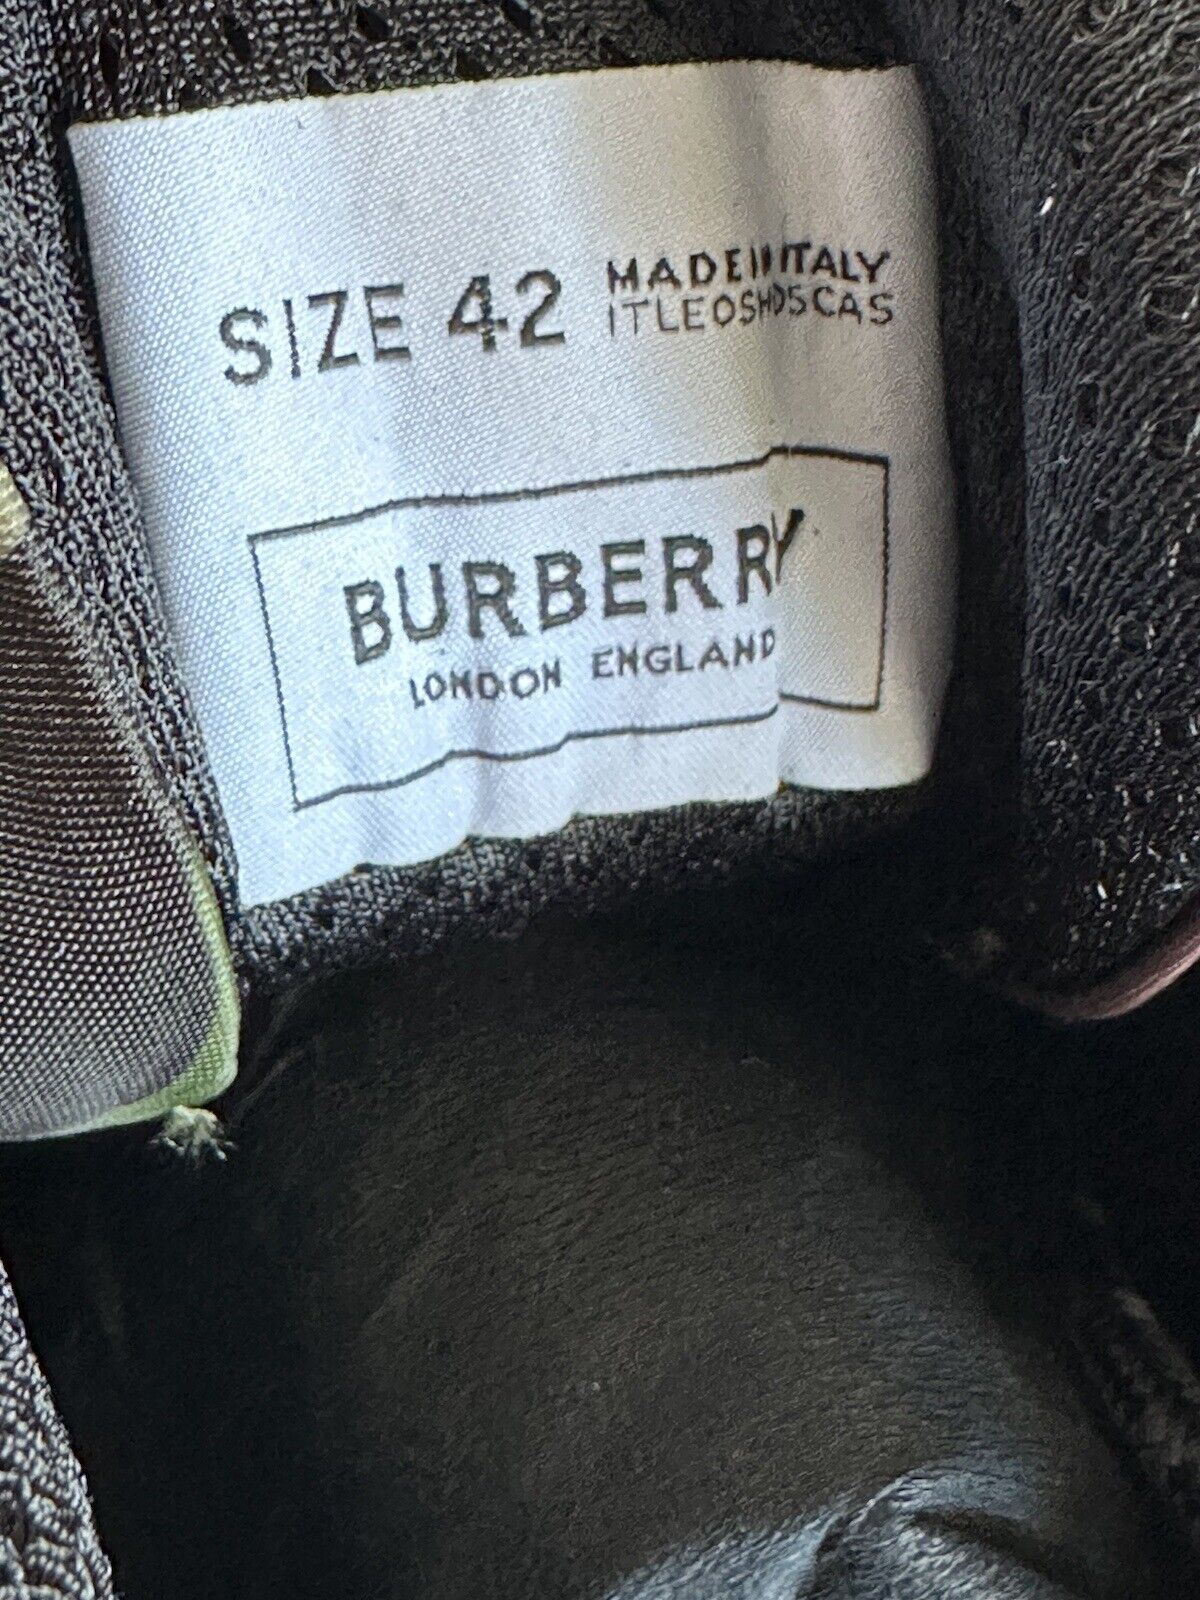 NIB $890 Burberry Men's Arthur Mangrove Green Sneakers 9 US (42 Euro) 8042185 IT